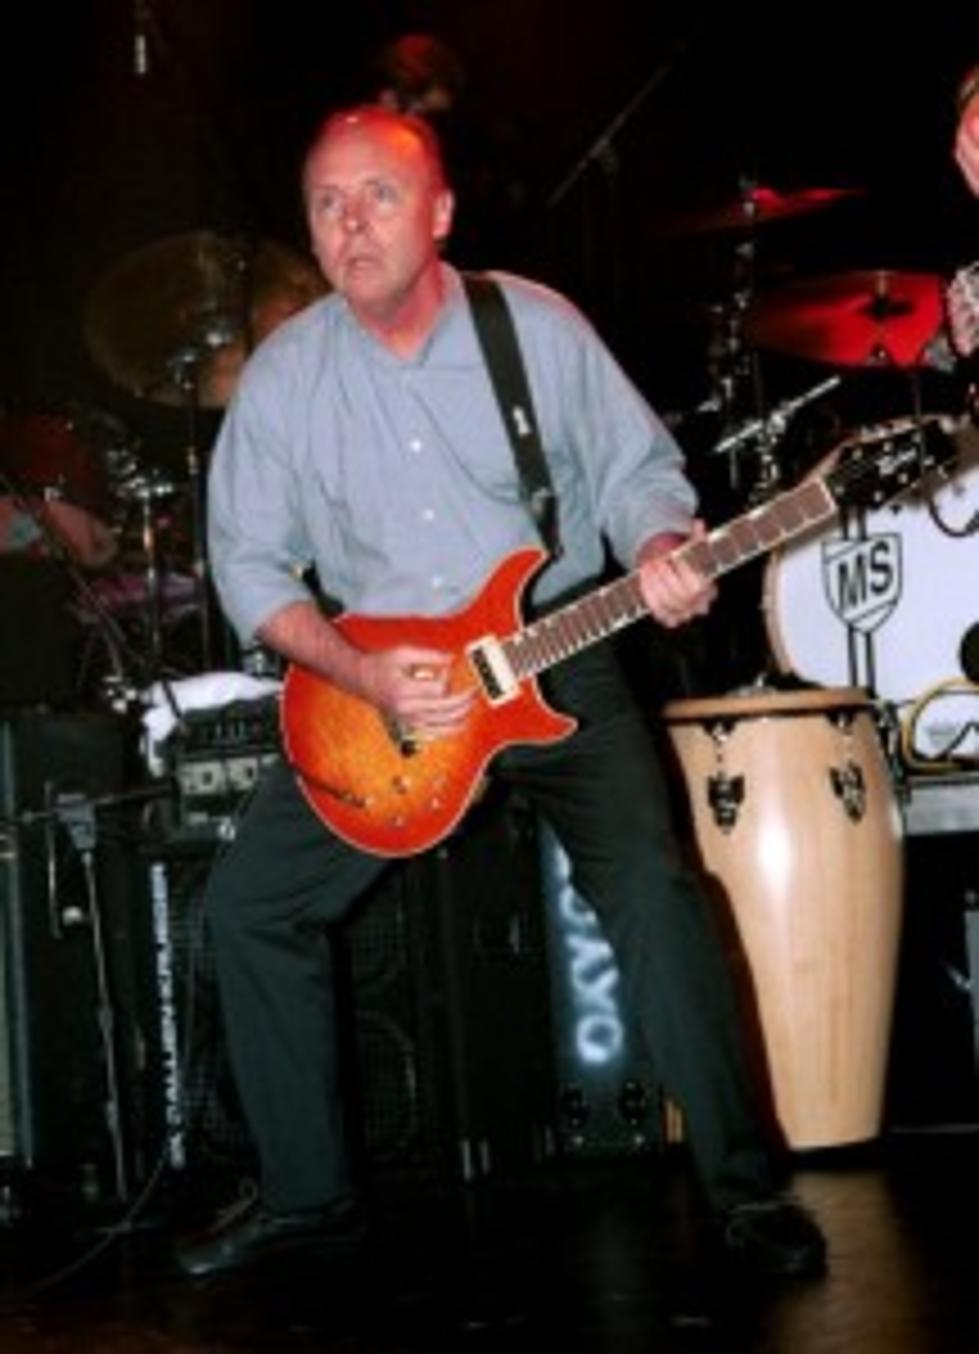 Legendary Guitarist Ronnie Montrose Death Ruled A Suicide